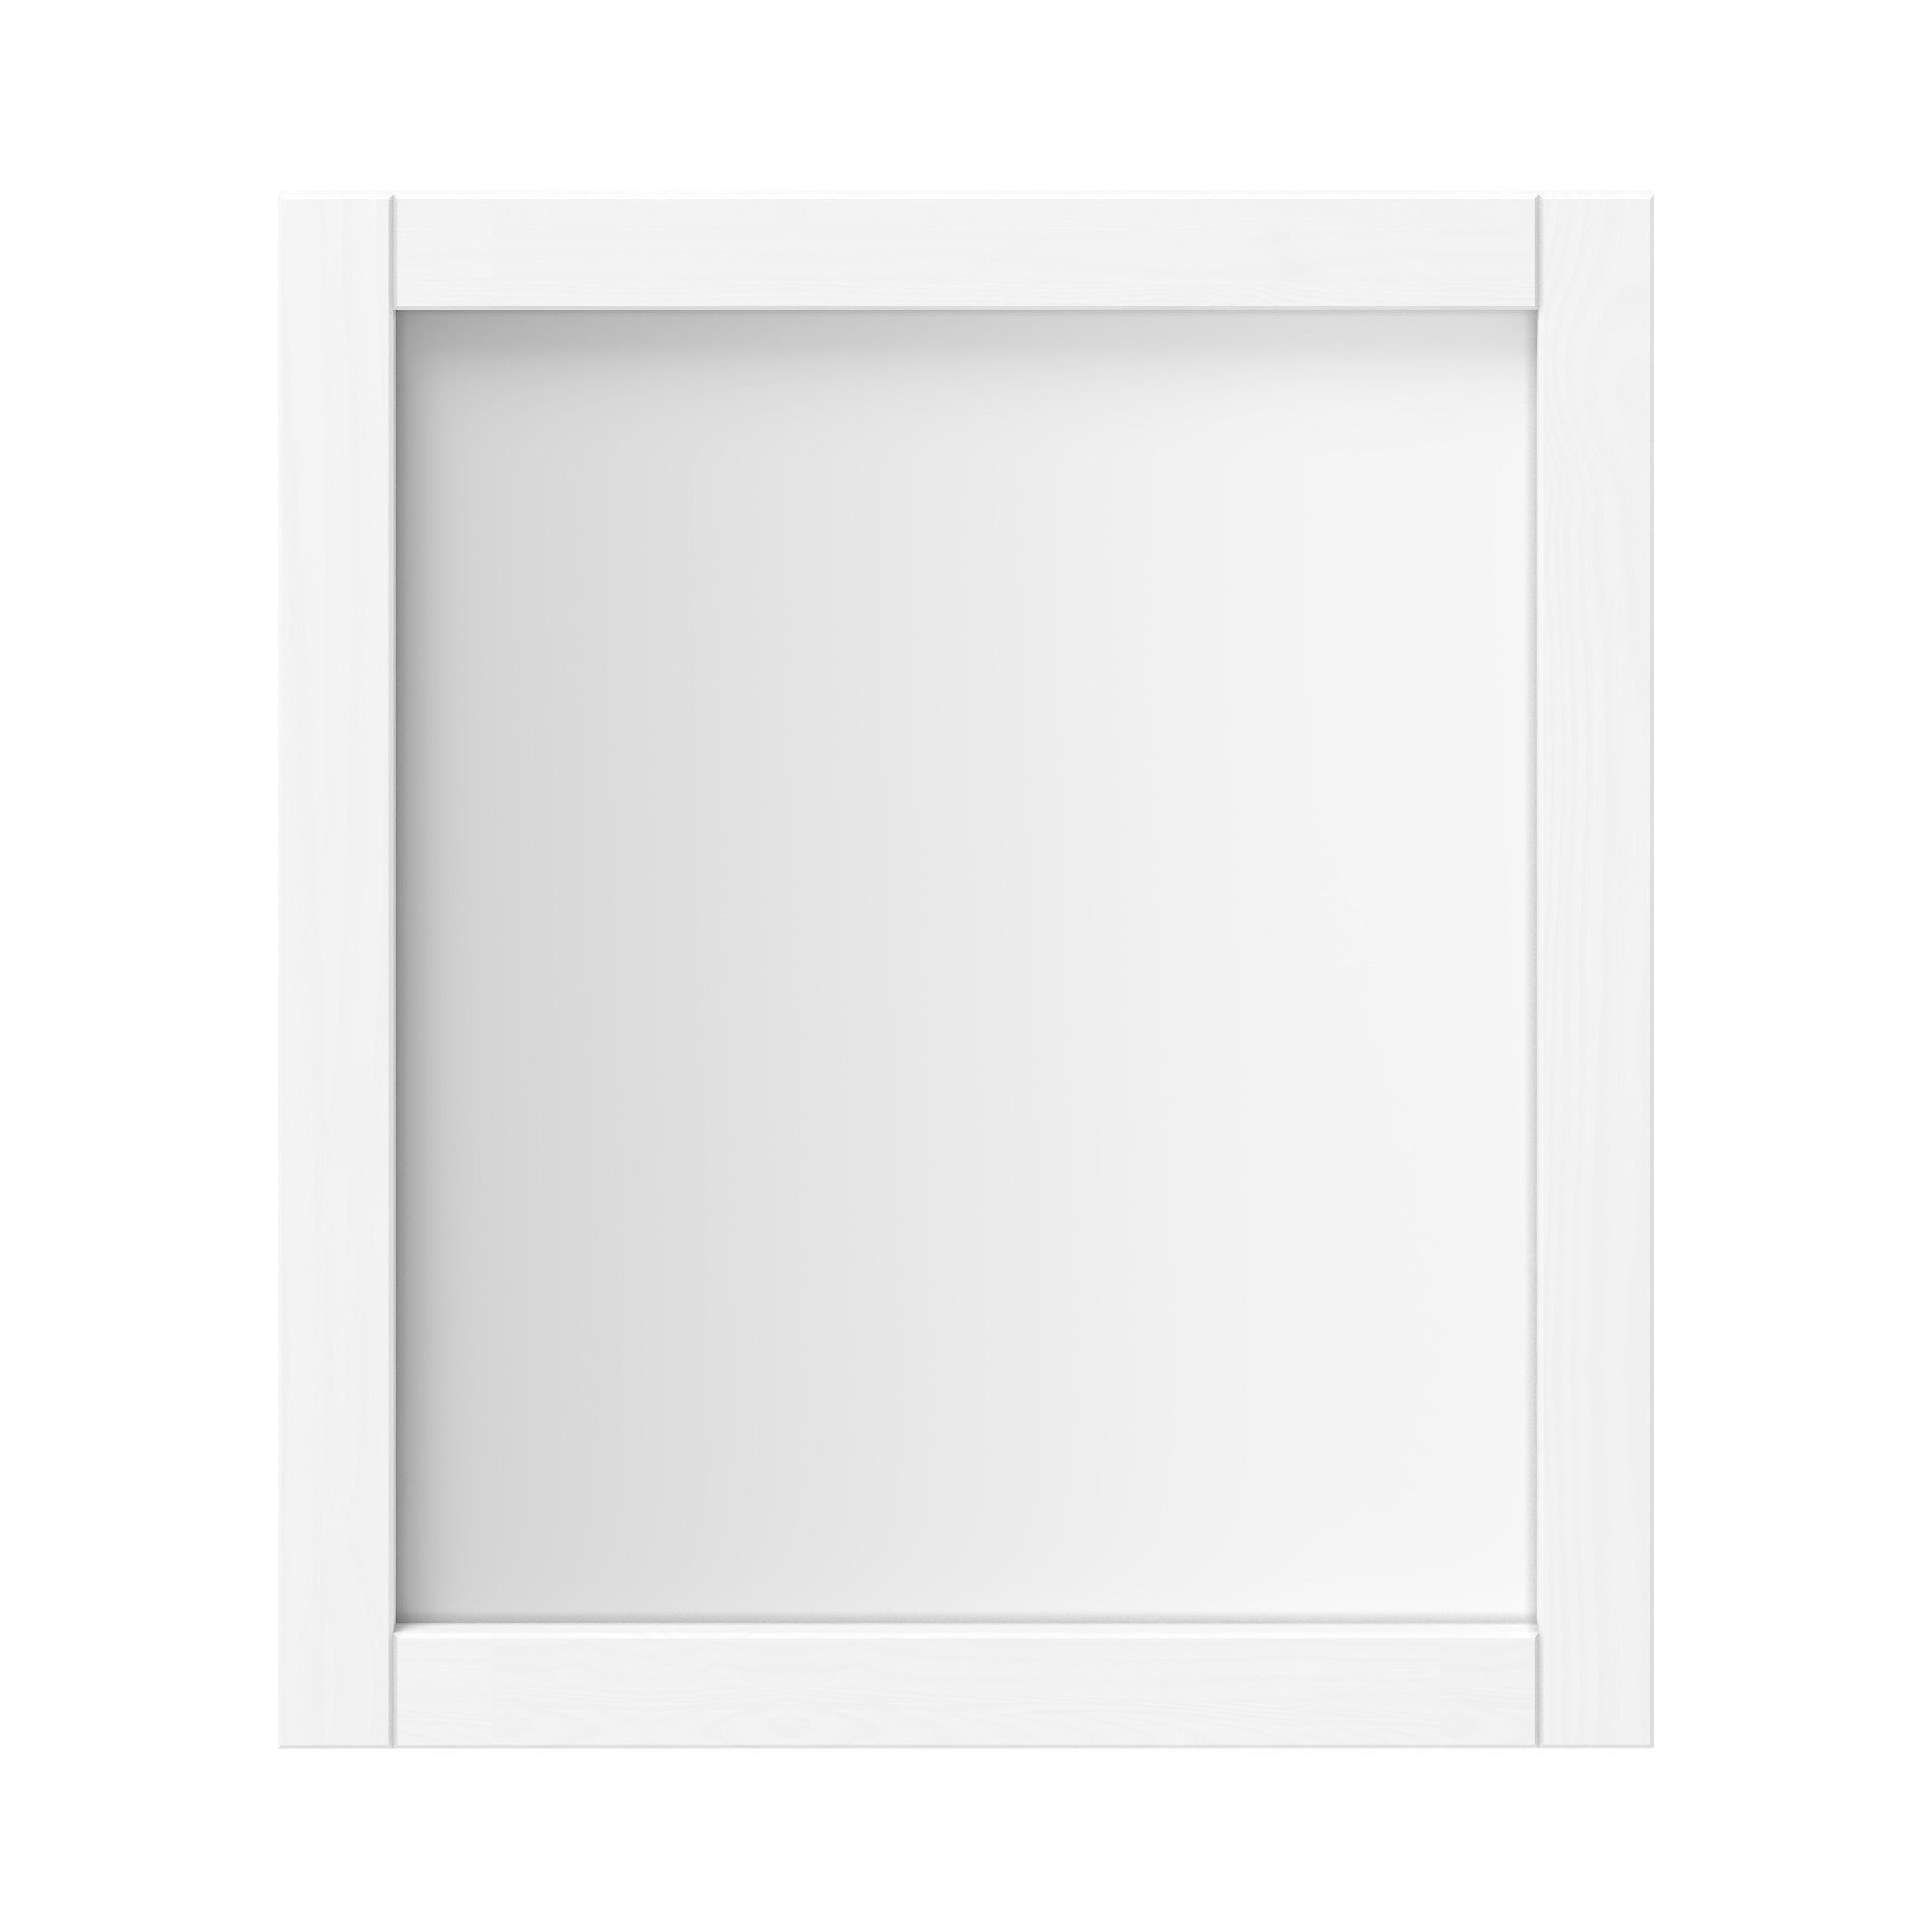 Kiefer Valencia, 62x70x3 Woodroom weiß Weiß cm BxHxT | lackiert, Spiegel massiv